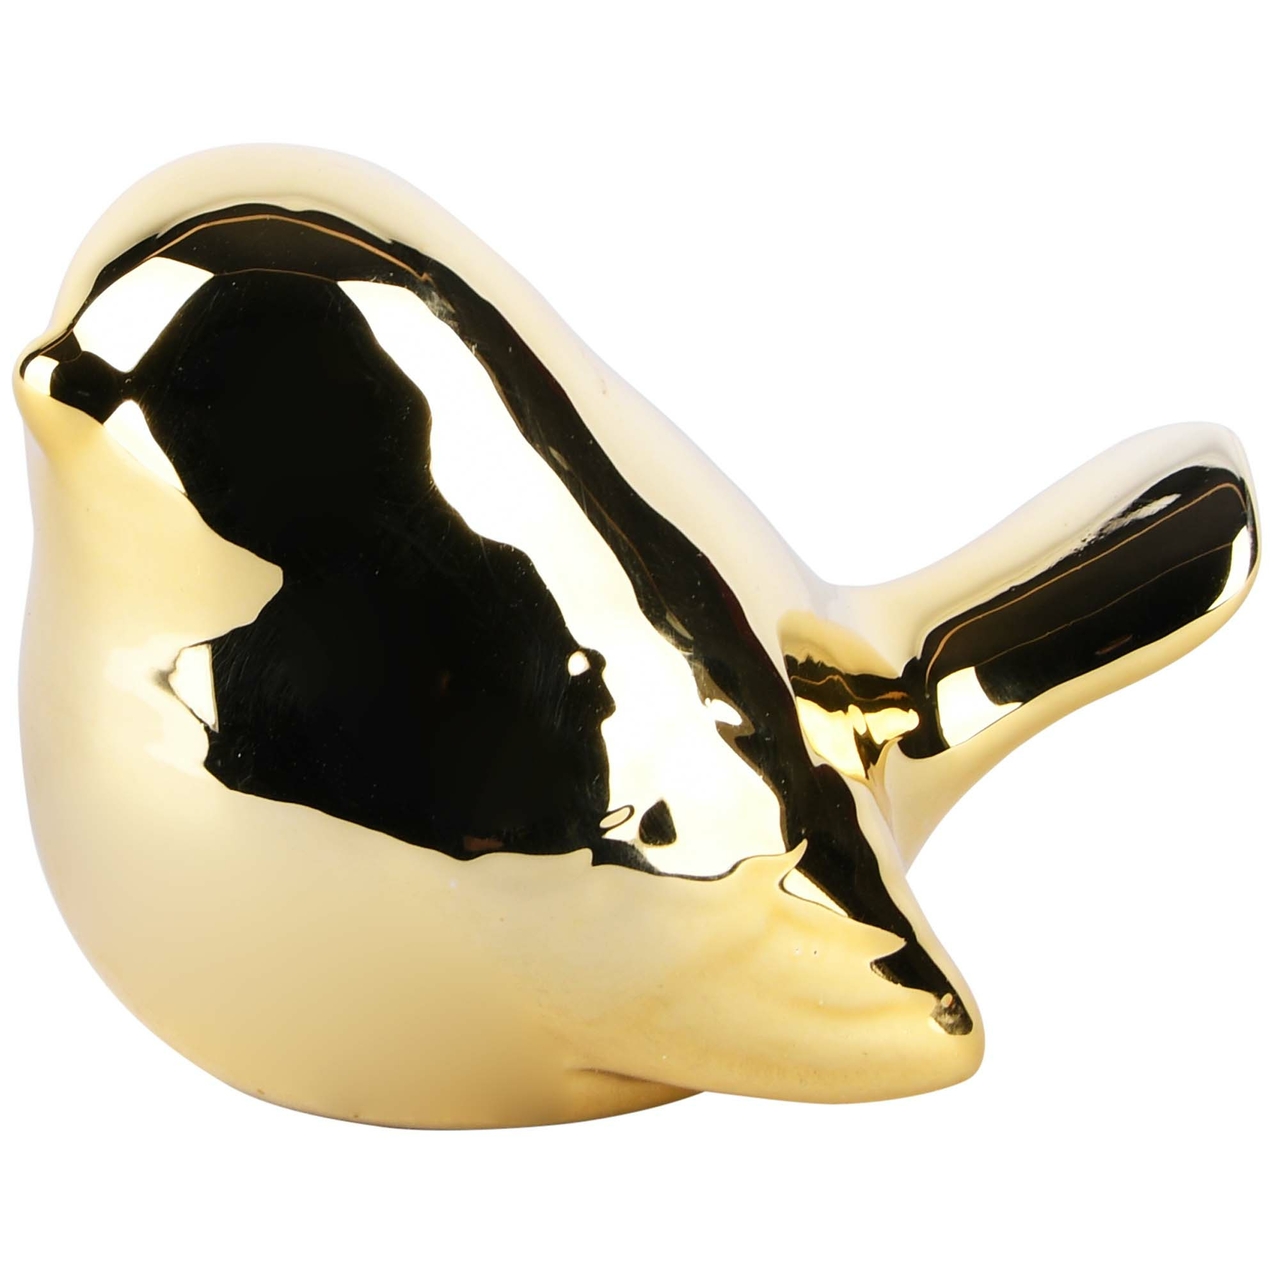 Dekoratief | Vogel zittend, shiny goud, keramiek, 12x8x9cm | A225370